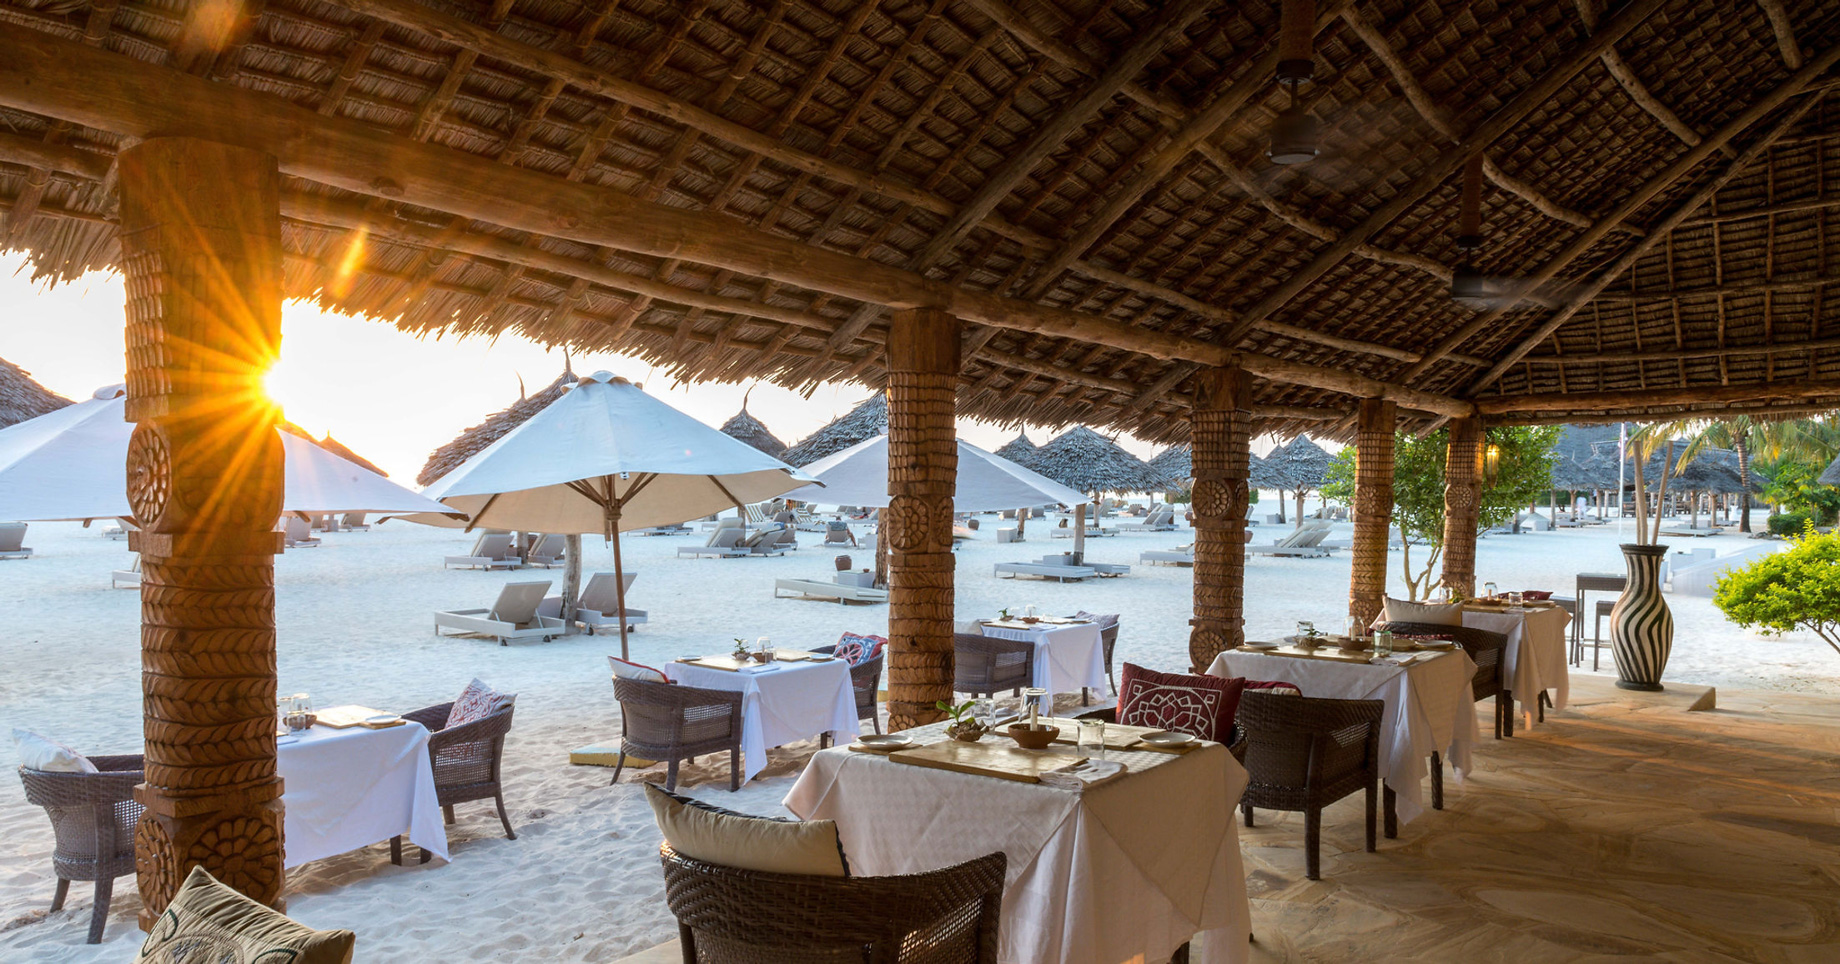 Gold Zanzibar Beach House & Spa Resort - Nungwi, Zanzibar, Tanzania - Gold Restaurant Beach View Dining